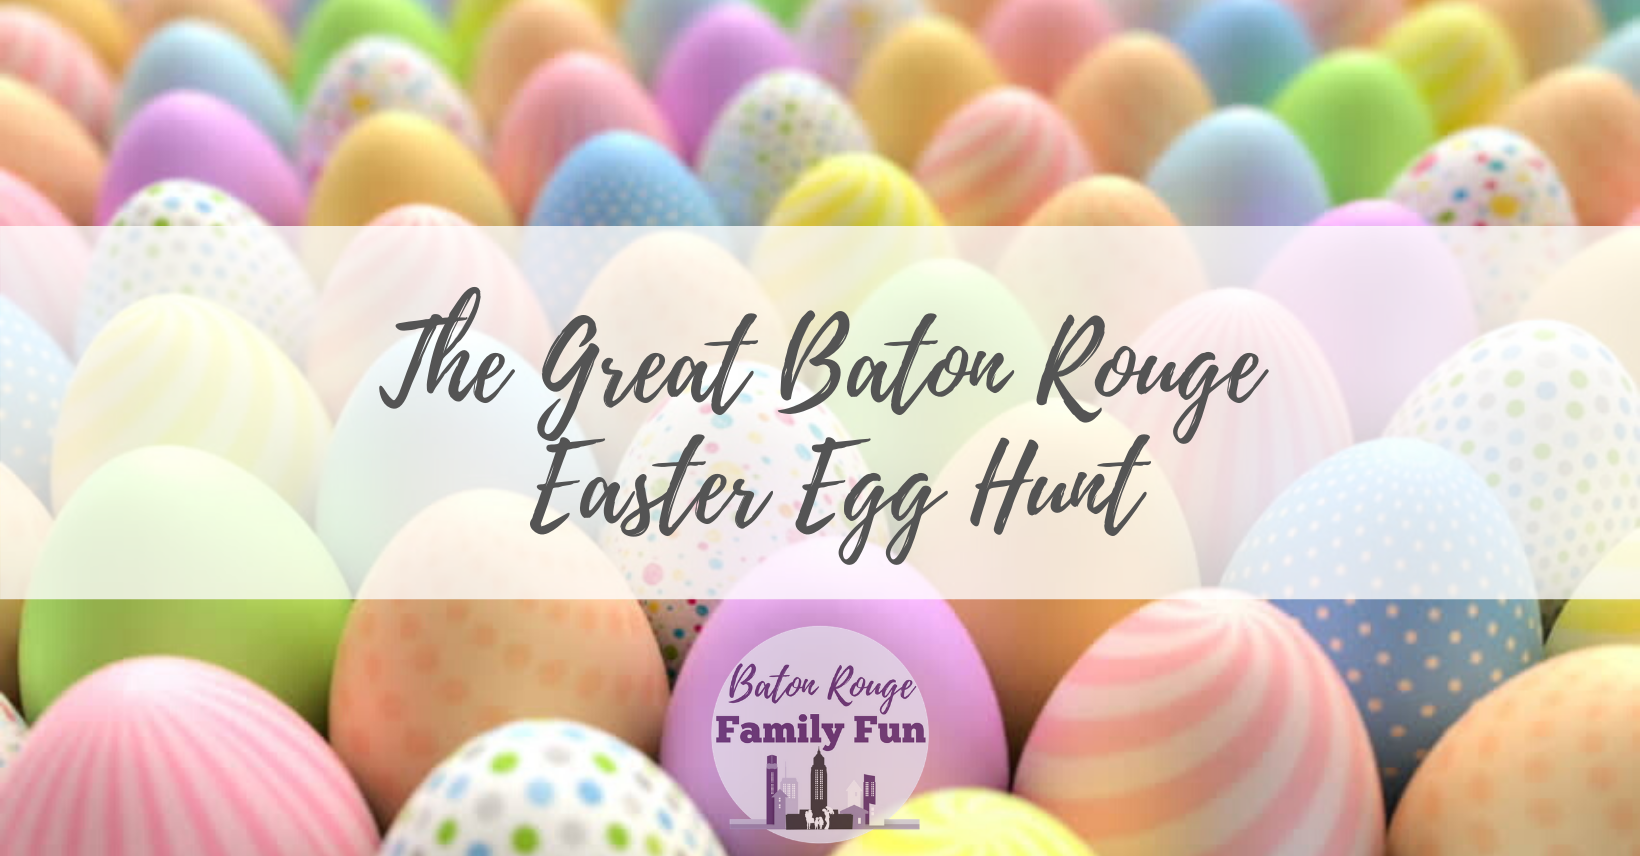 Baton Rouge Easter Egg Hunt